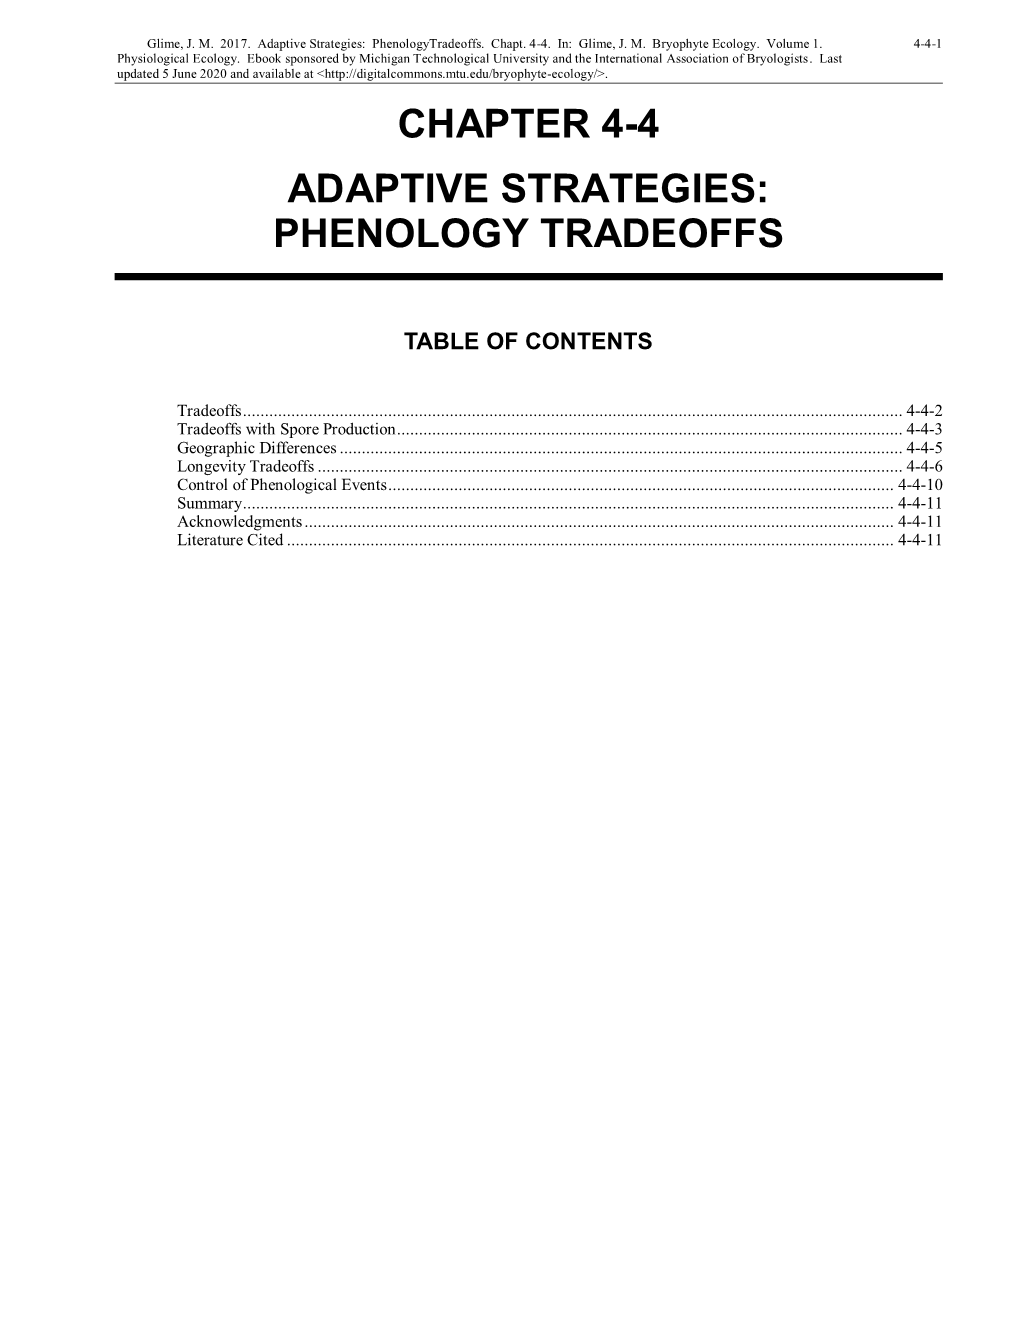 Volume 1, Chapter 4-4: Adaptive Strategies: Phenology Tradeoffs